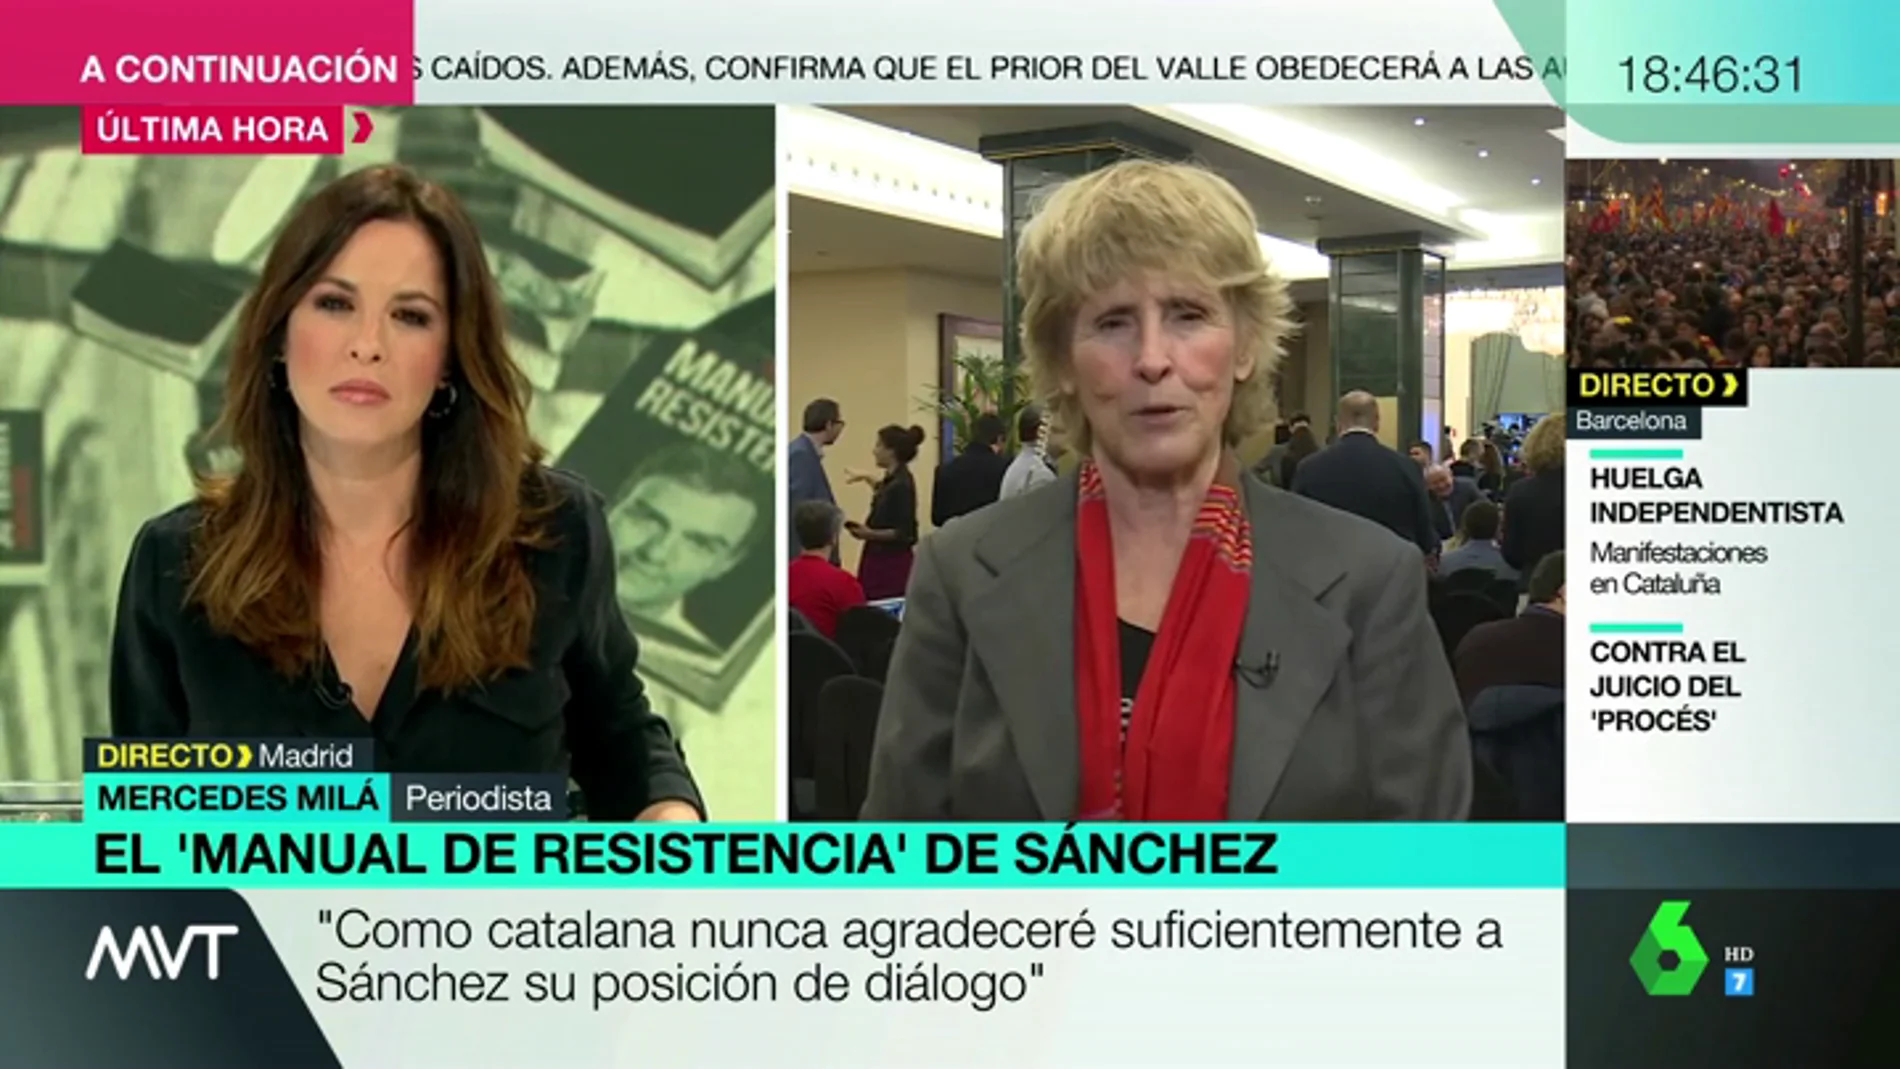 Mercedes Milá: "No me hables de Franco que se me revuelve el estómoago"